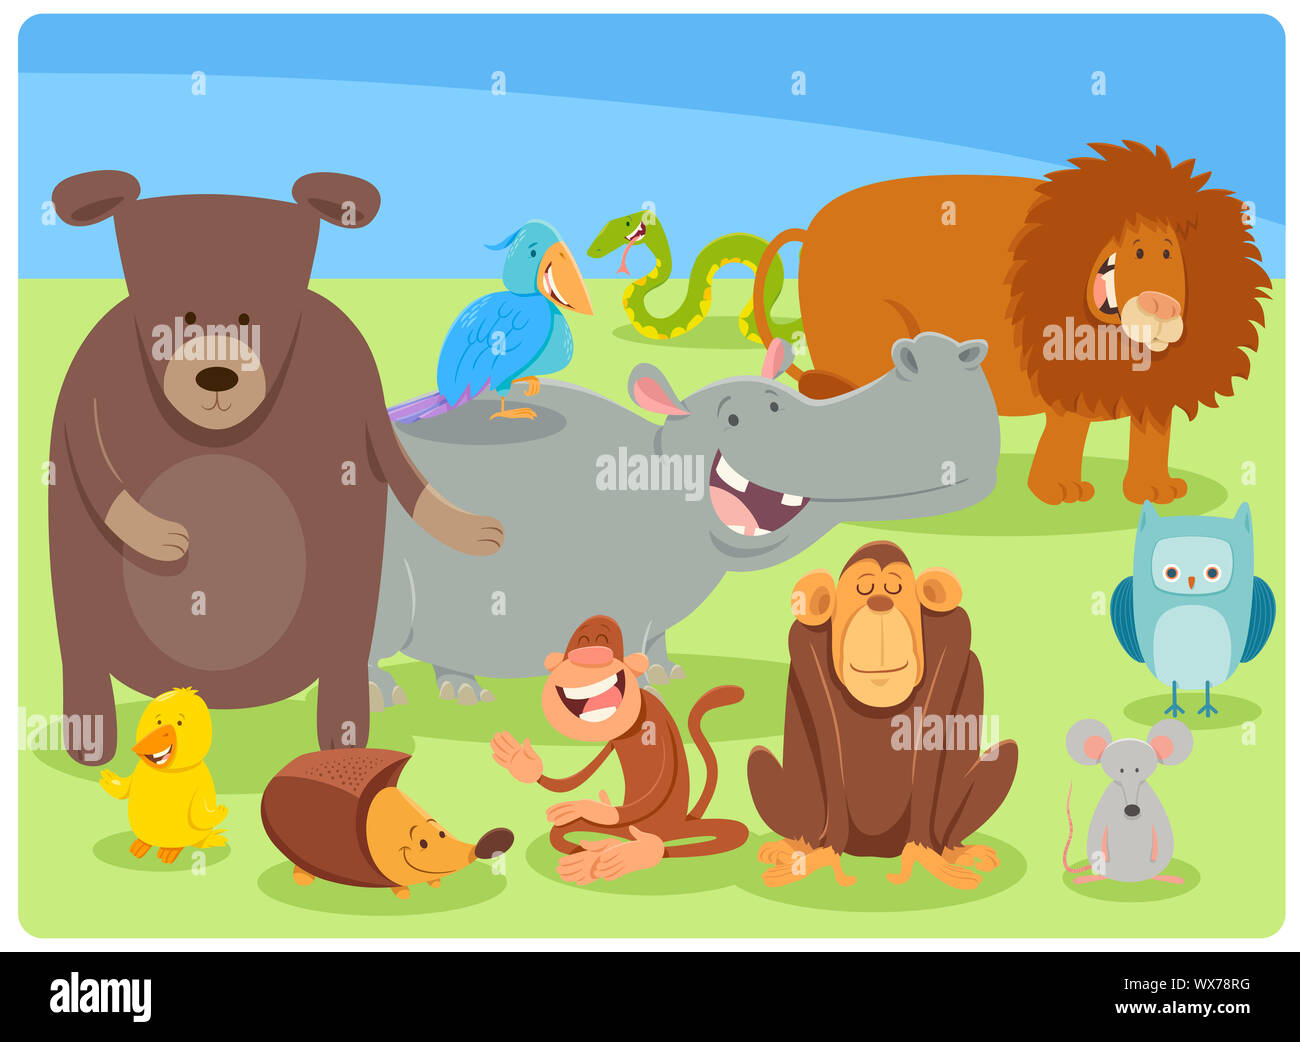 funny cartoon animal characters group Stock Photo - Alamy